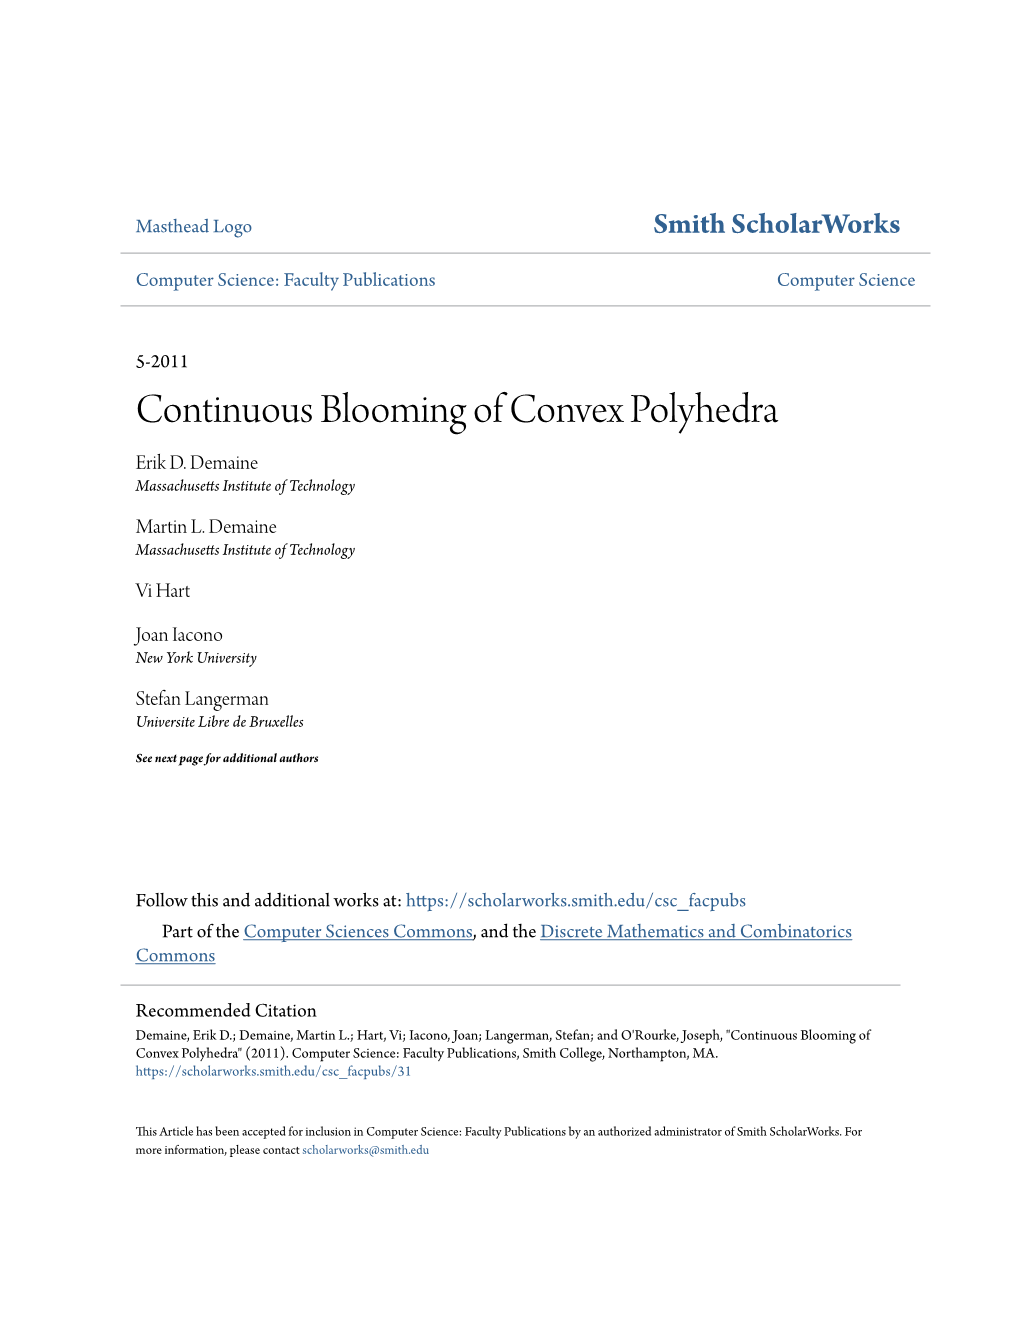 Continuous Blooming of Convex Polyhedra Erik D